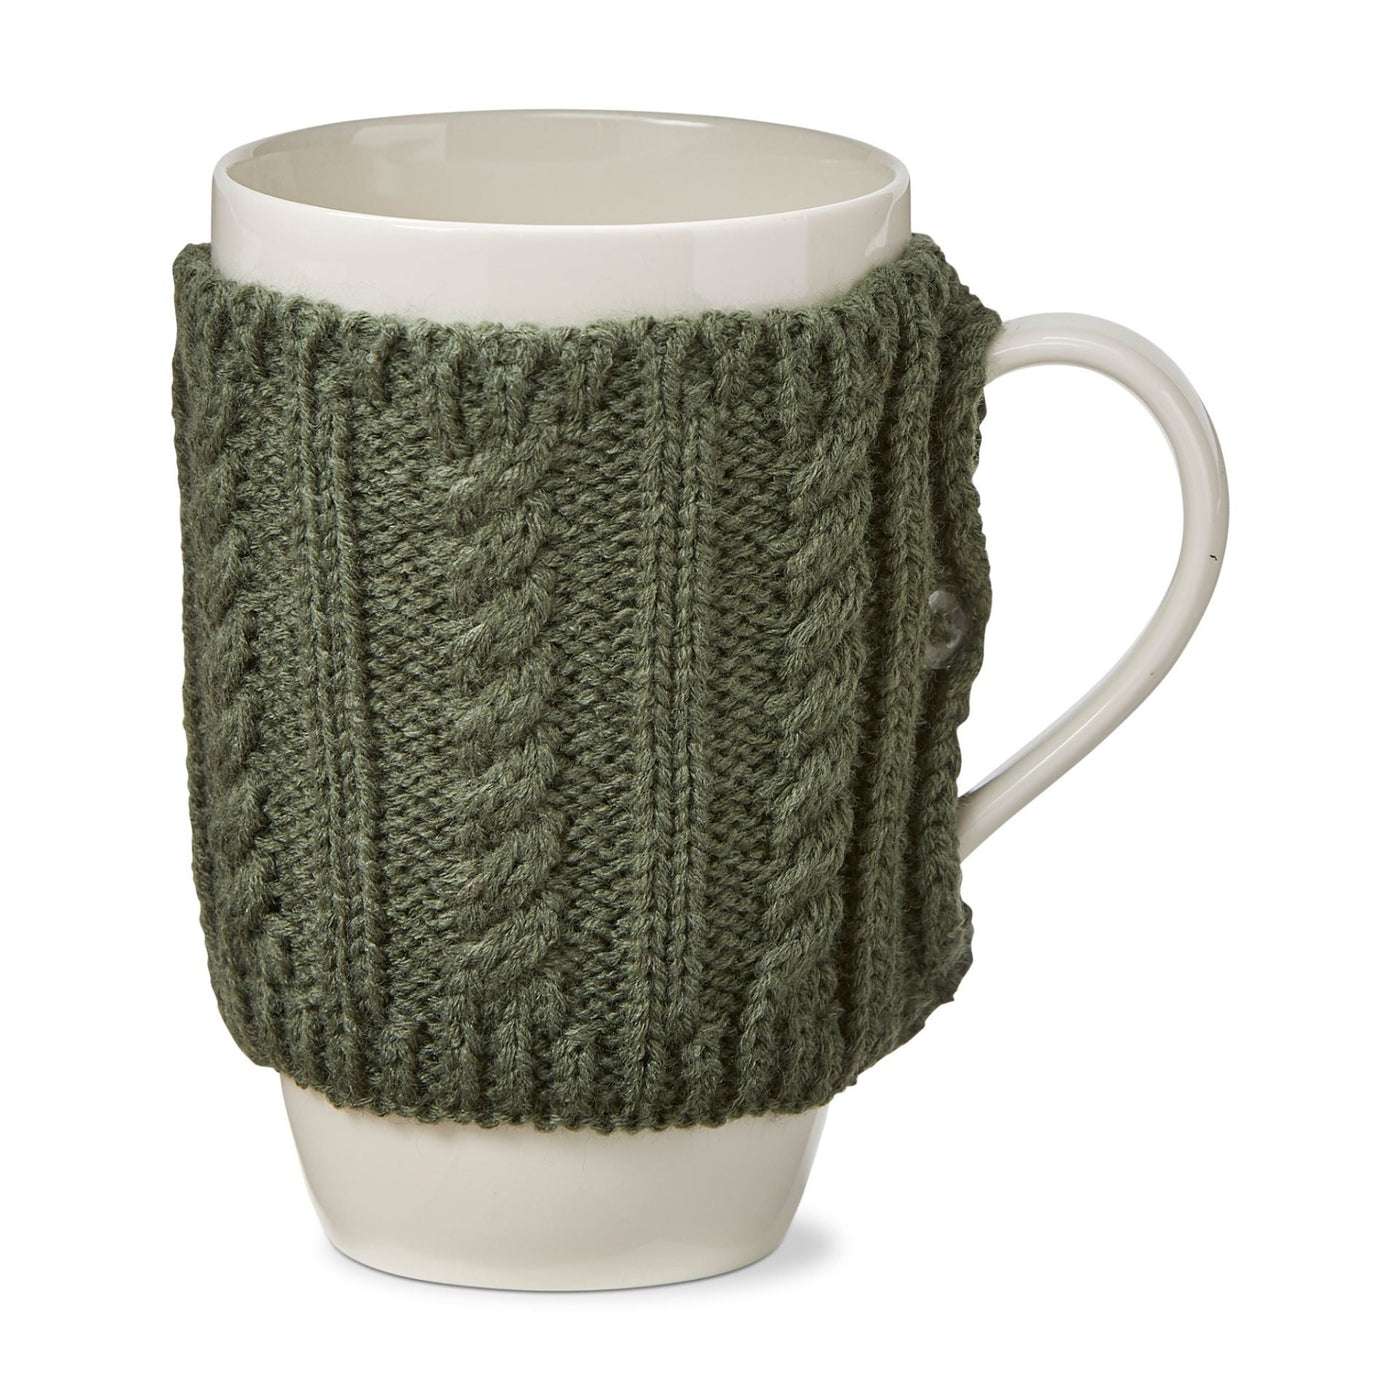 Evergreen Sweater Mug